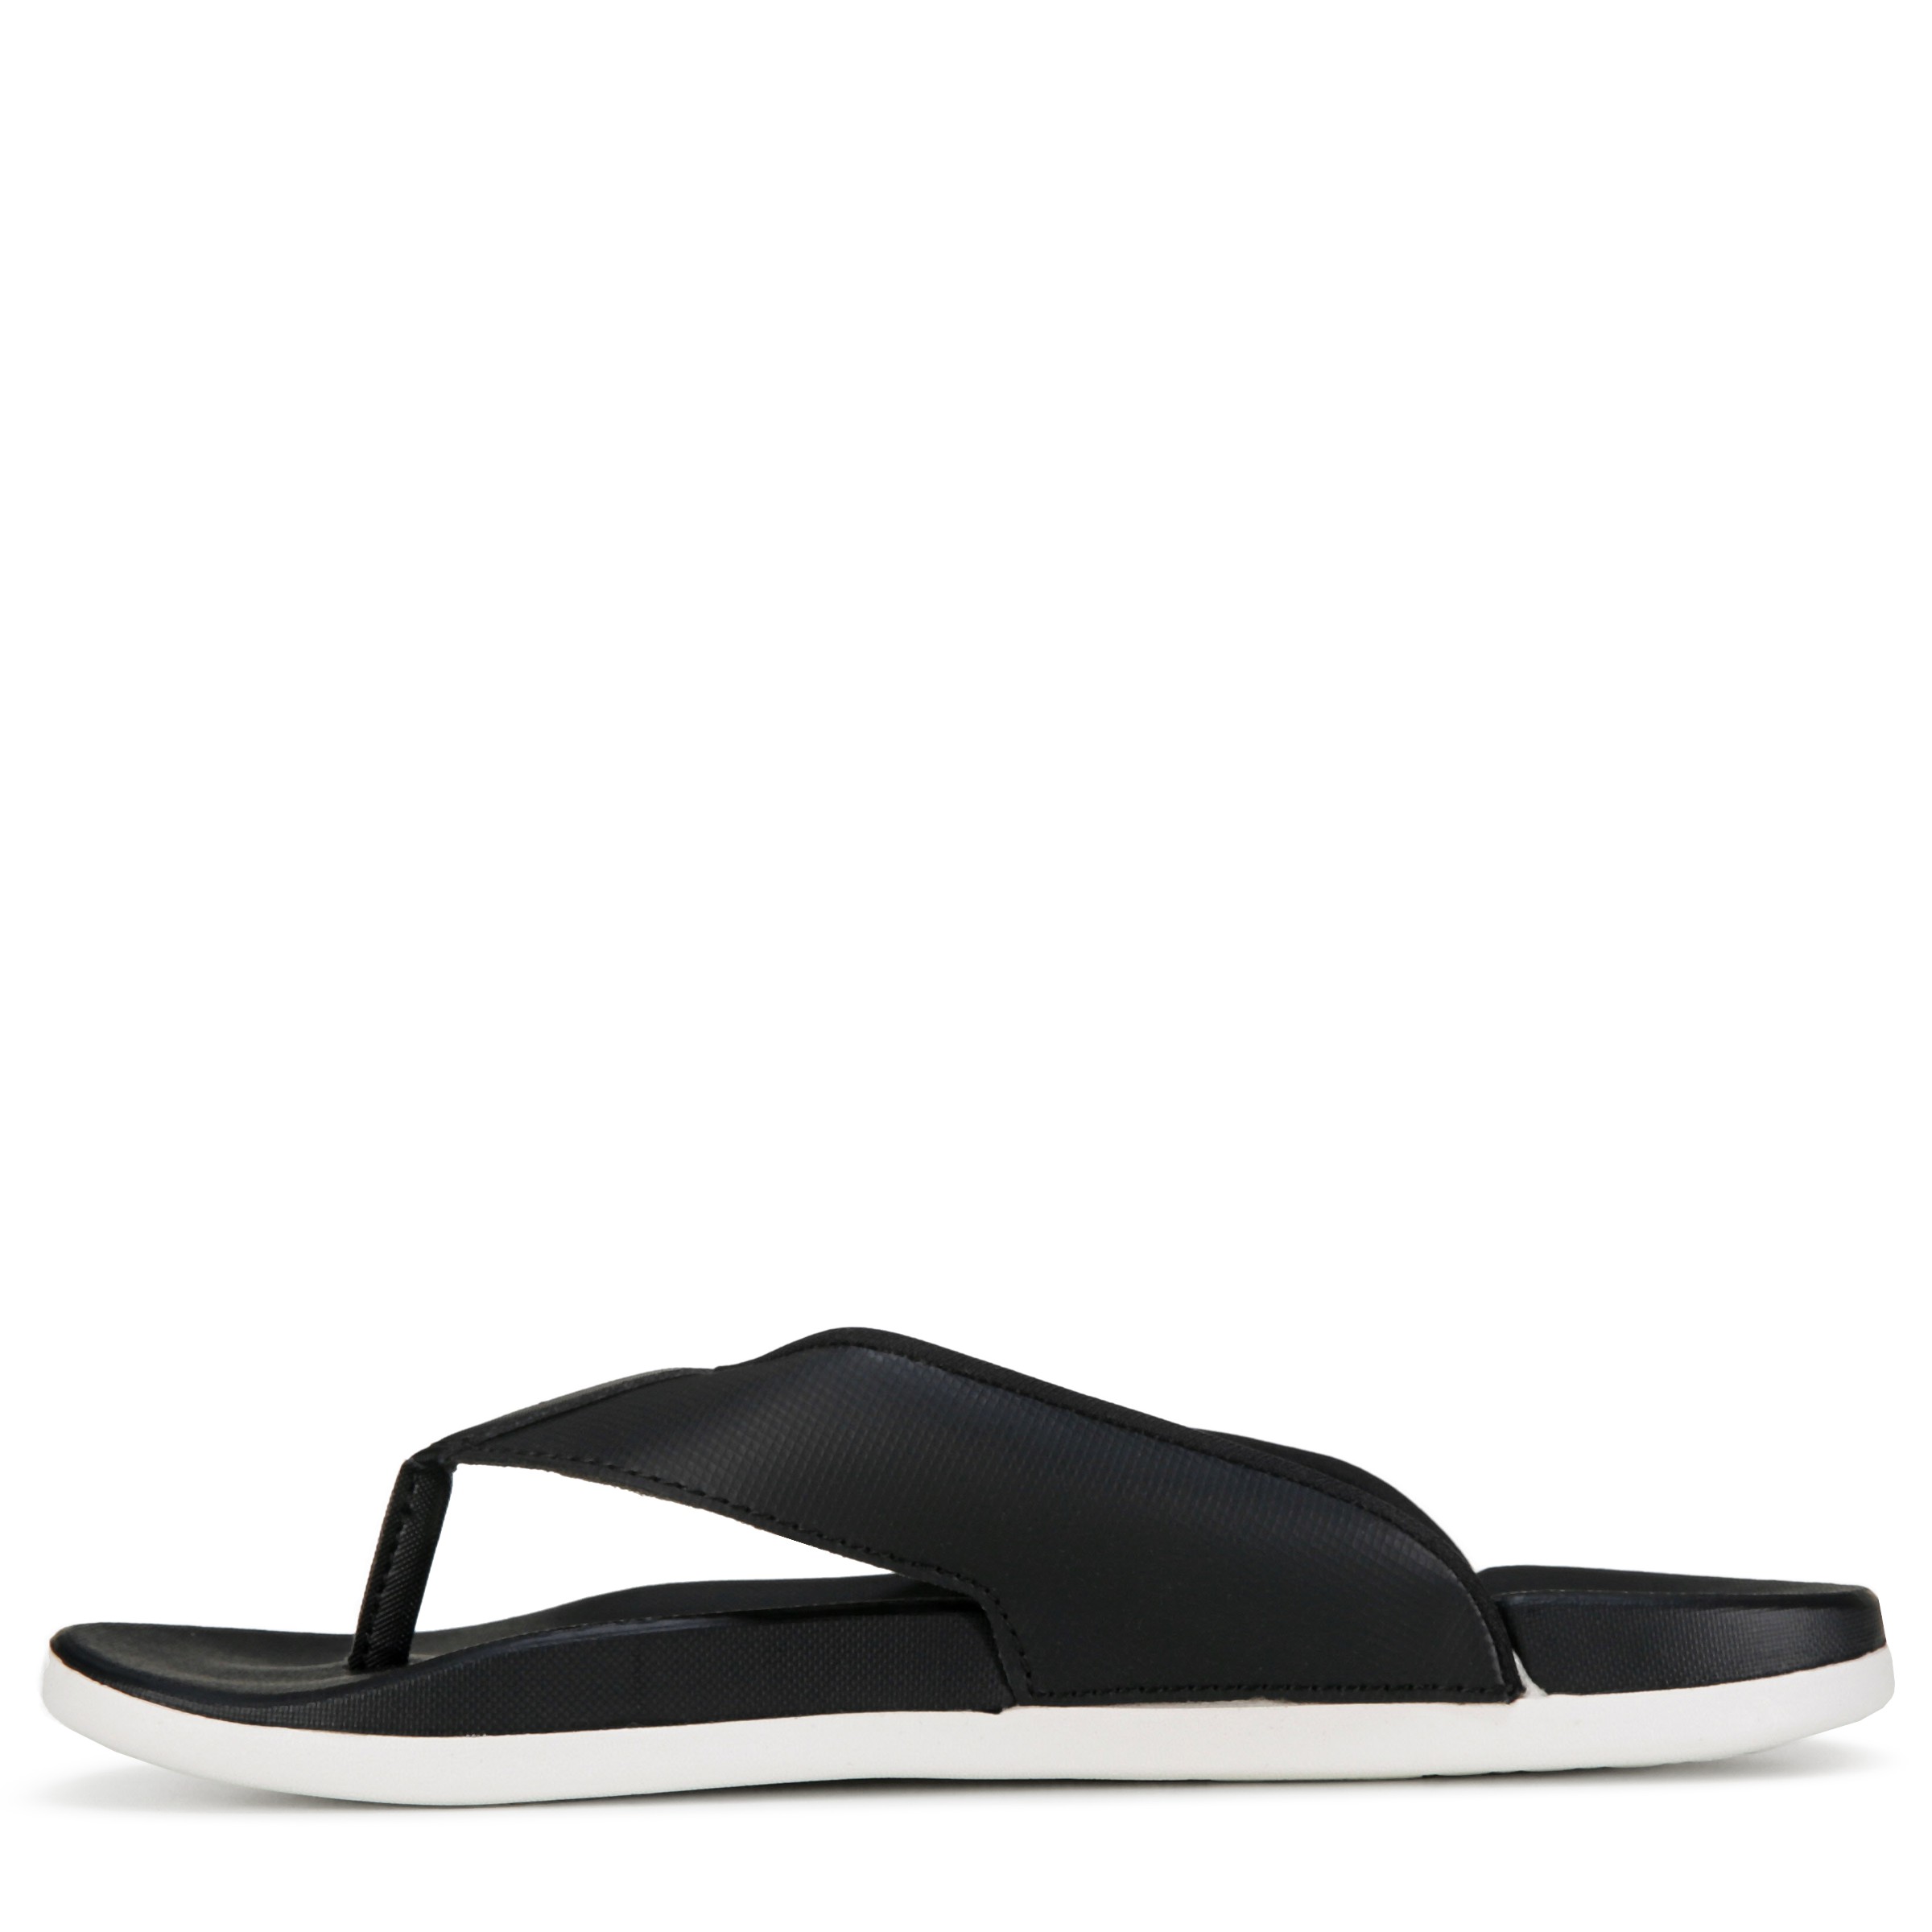 Women's Comfort Flip Flop Sandal